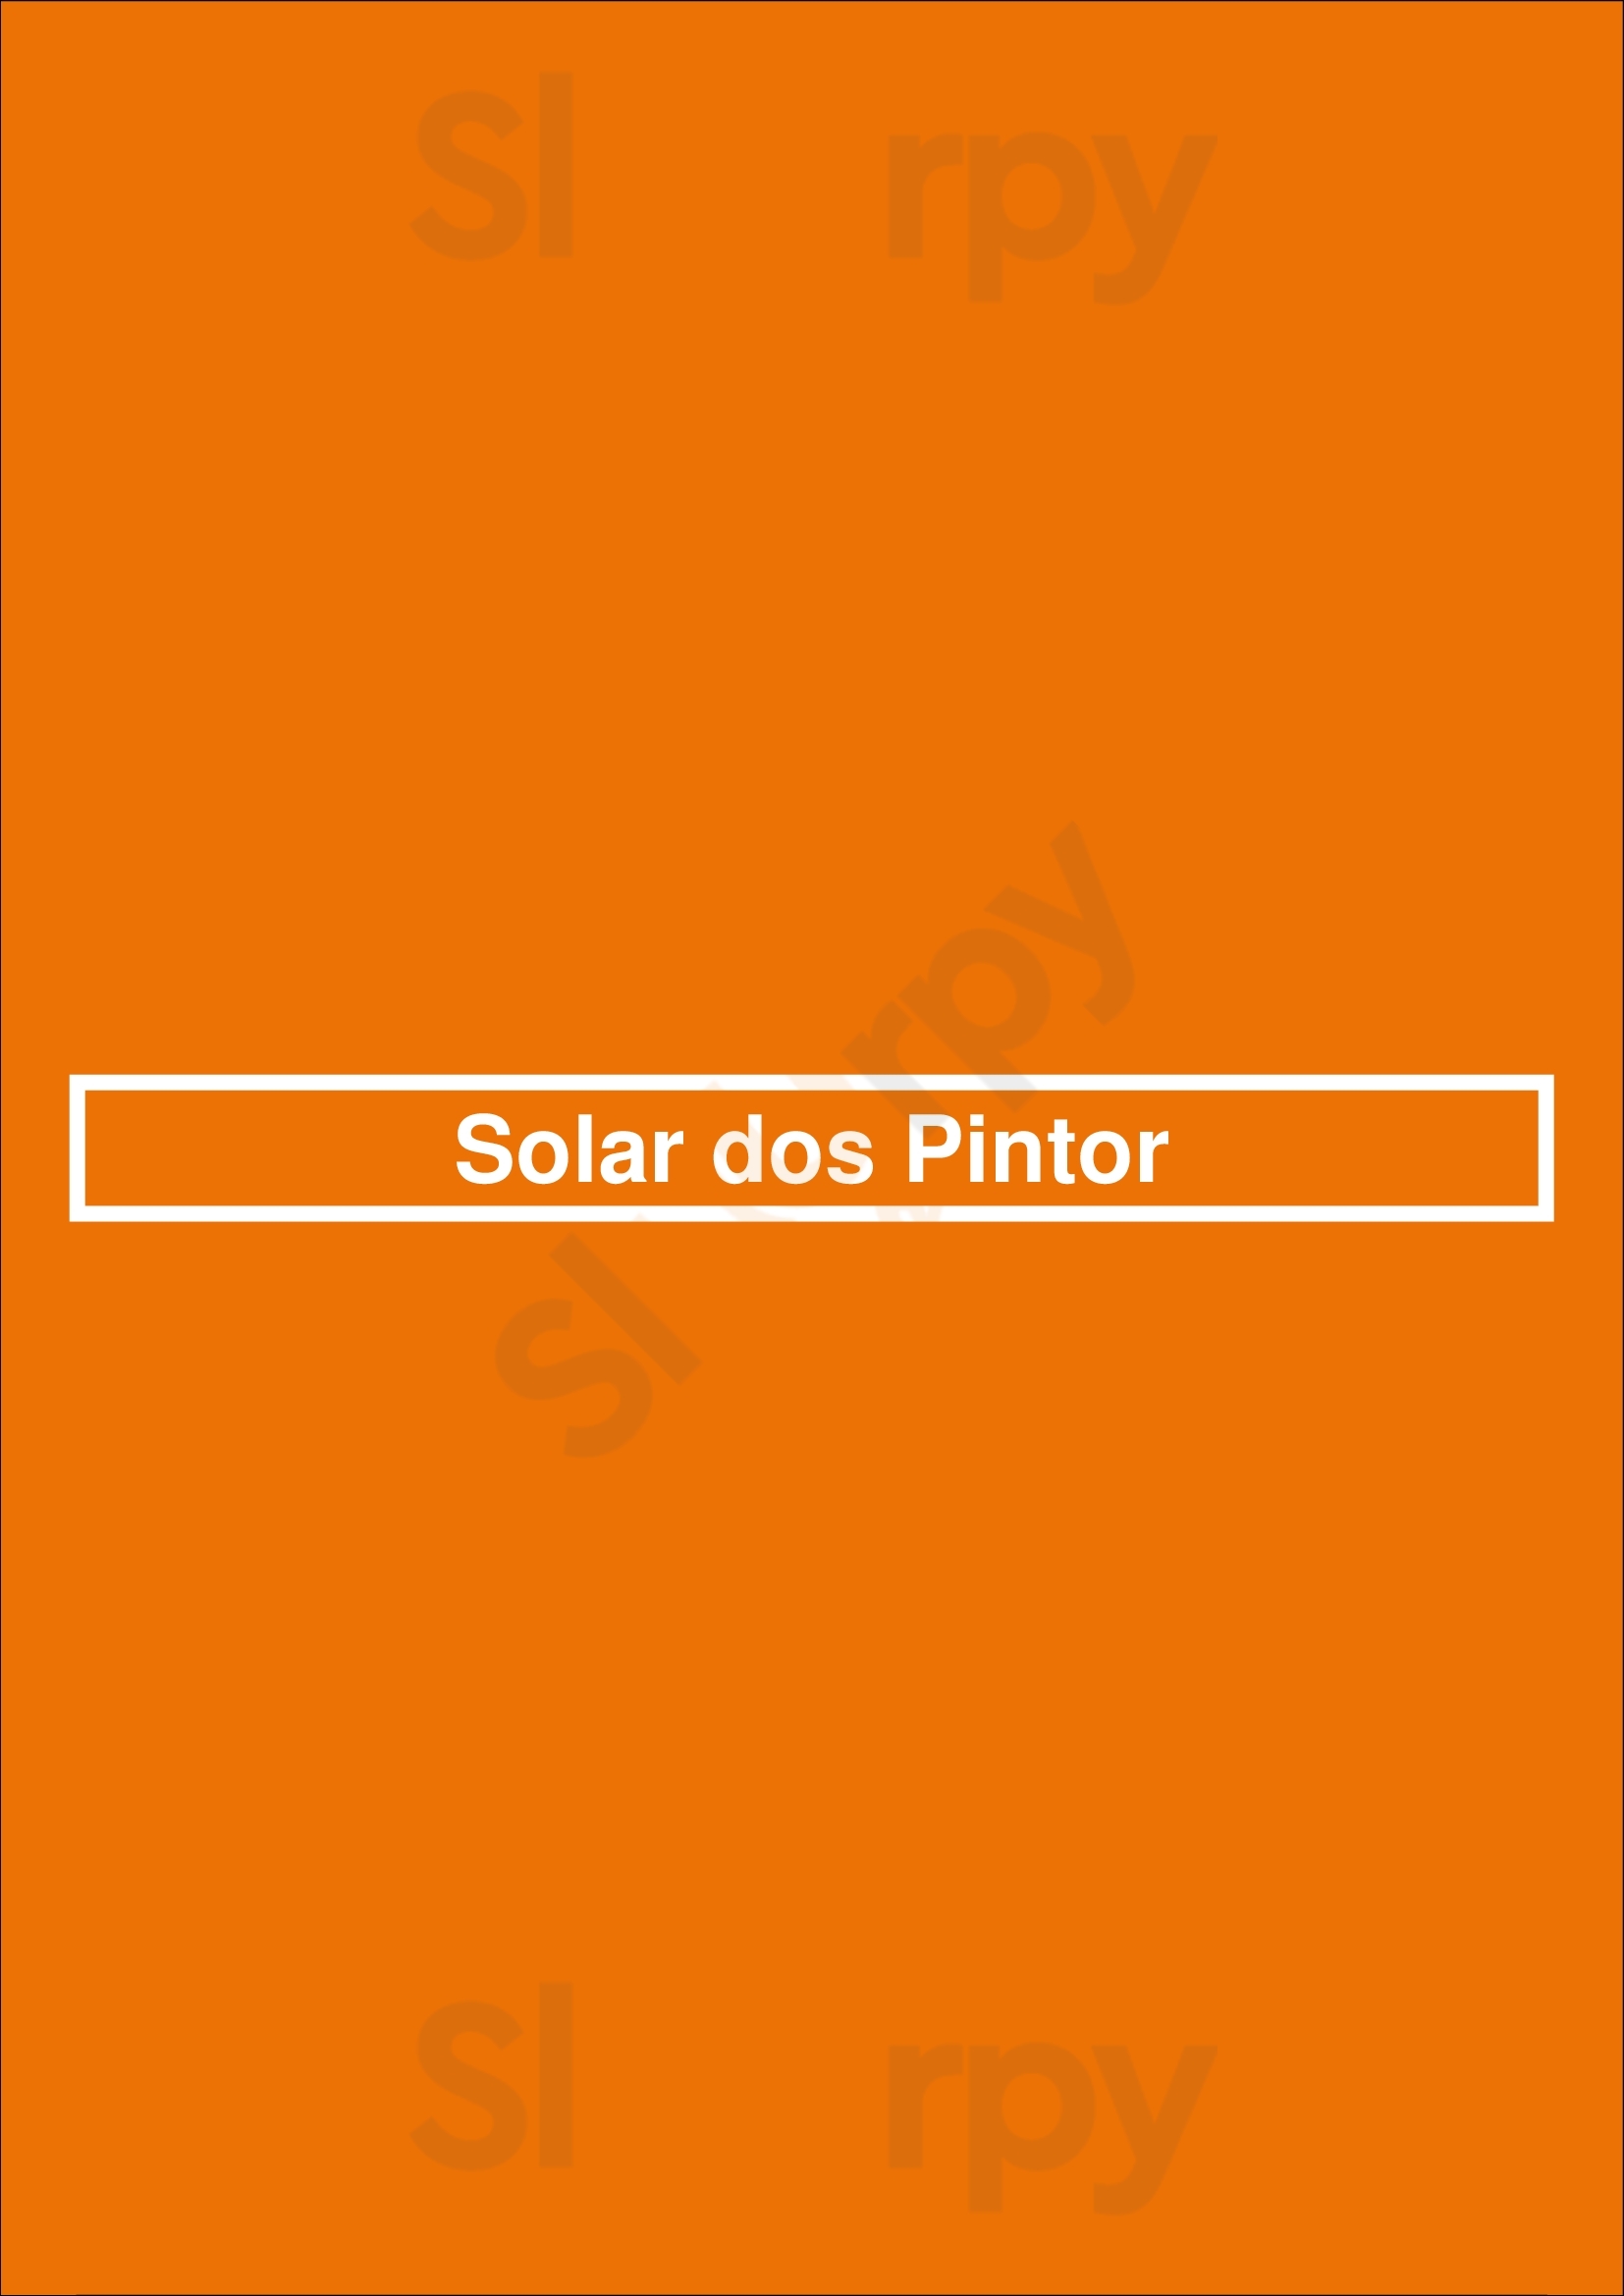 Solar Dos Pintor Loures Menu - 1